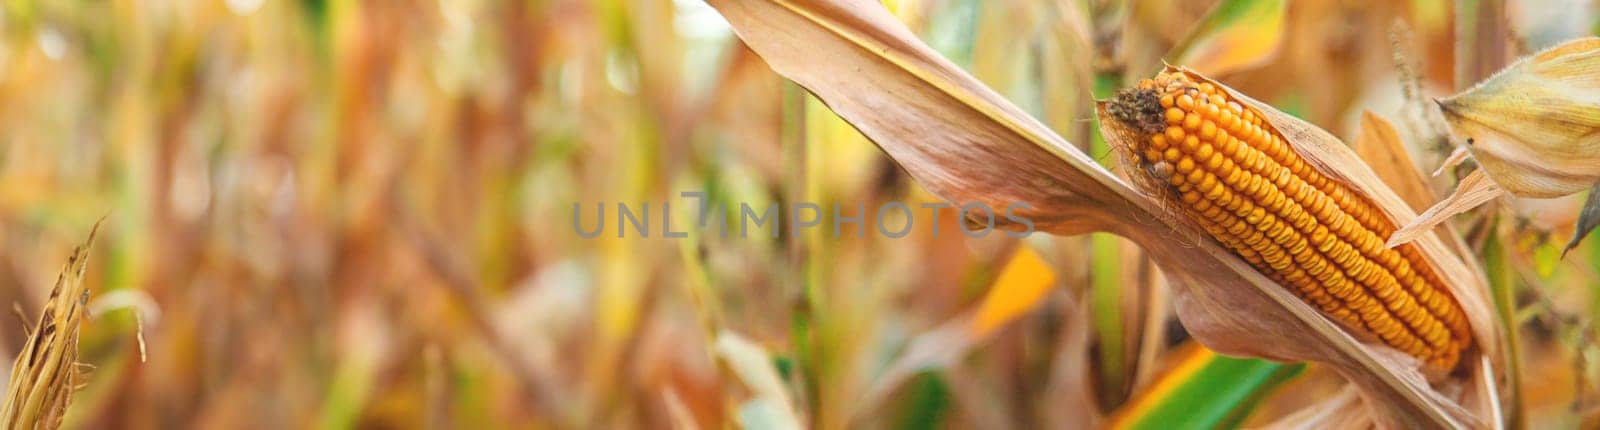 Corn harvest on the field. Selective focus. food.